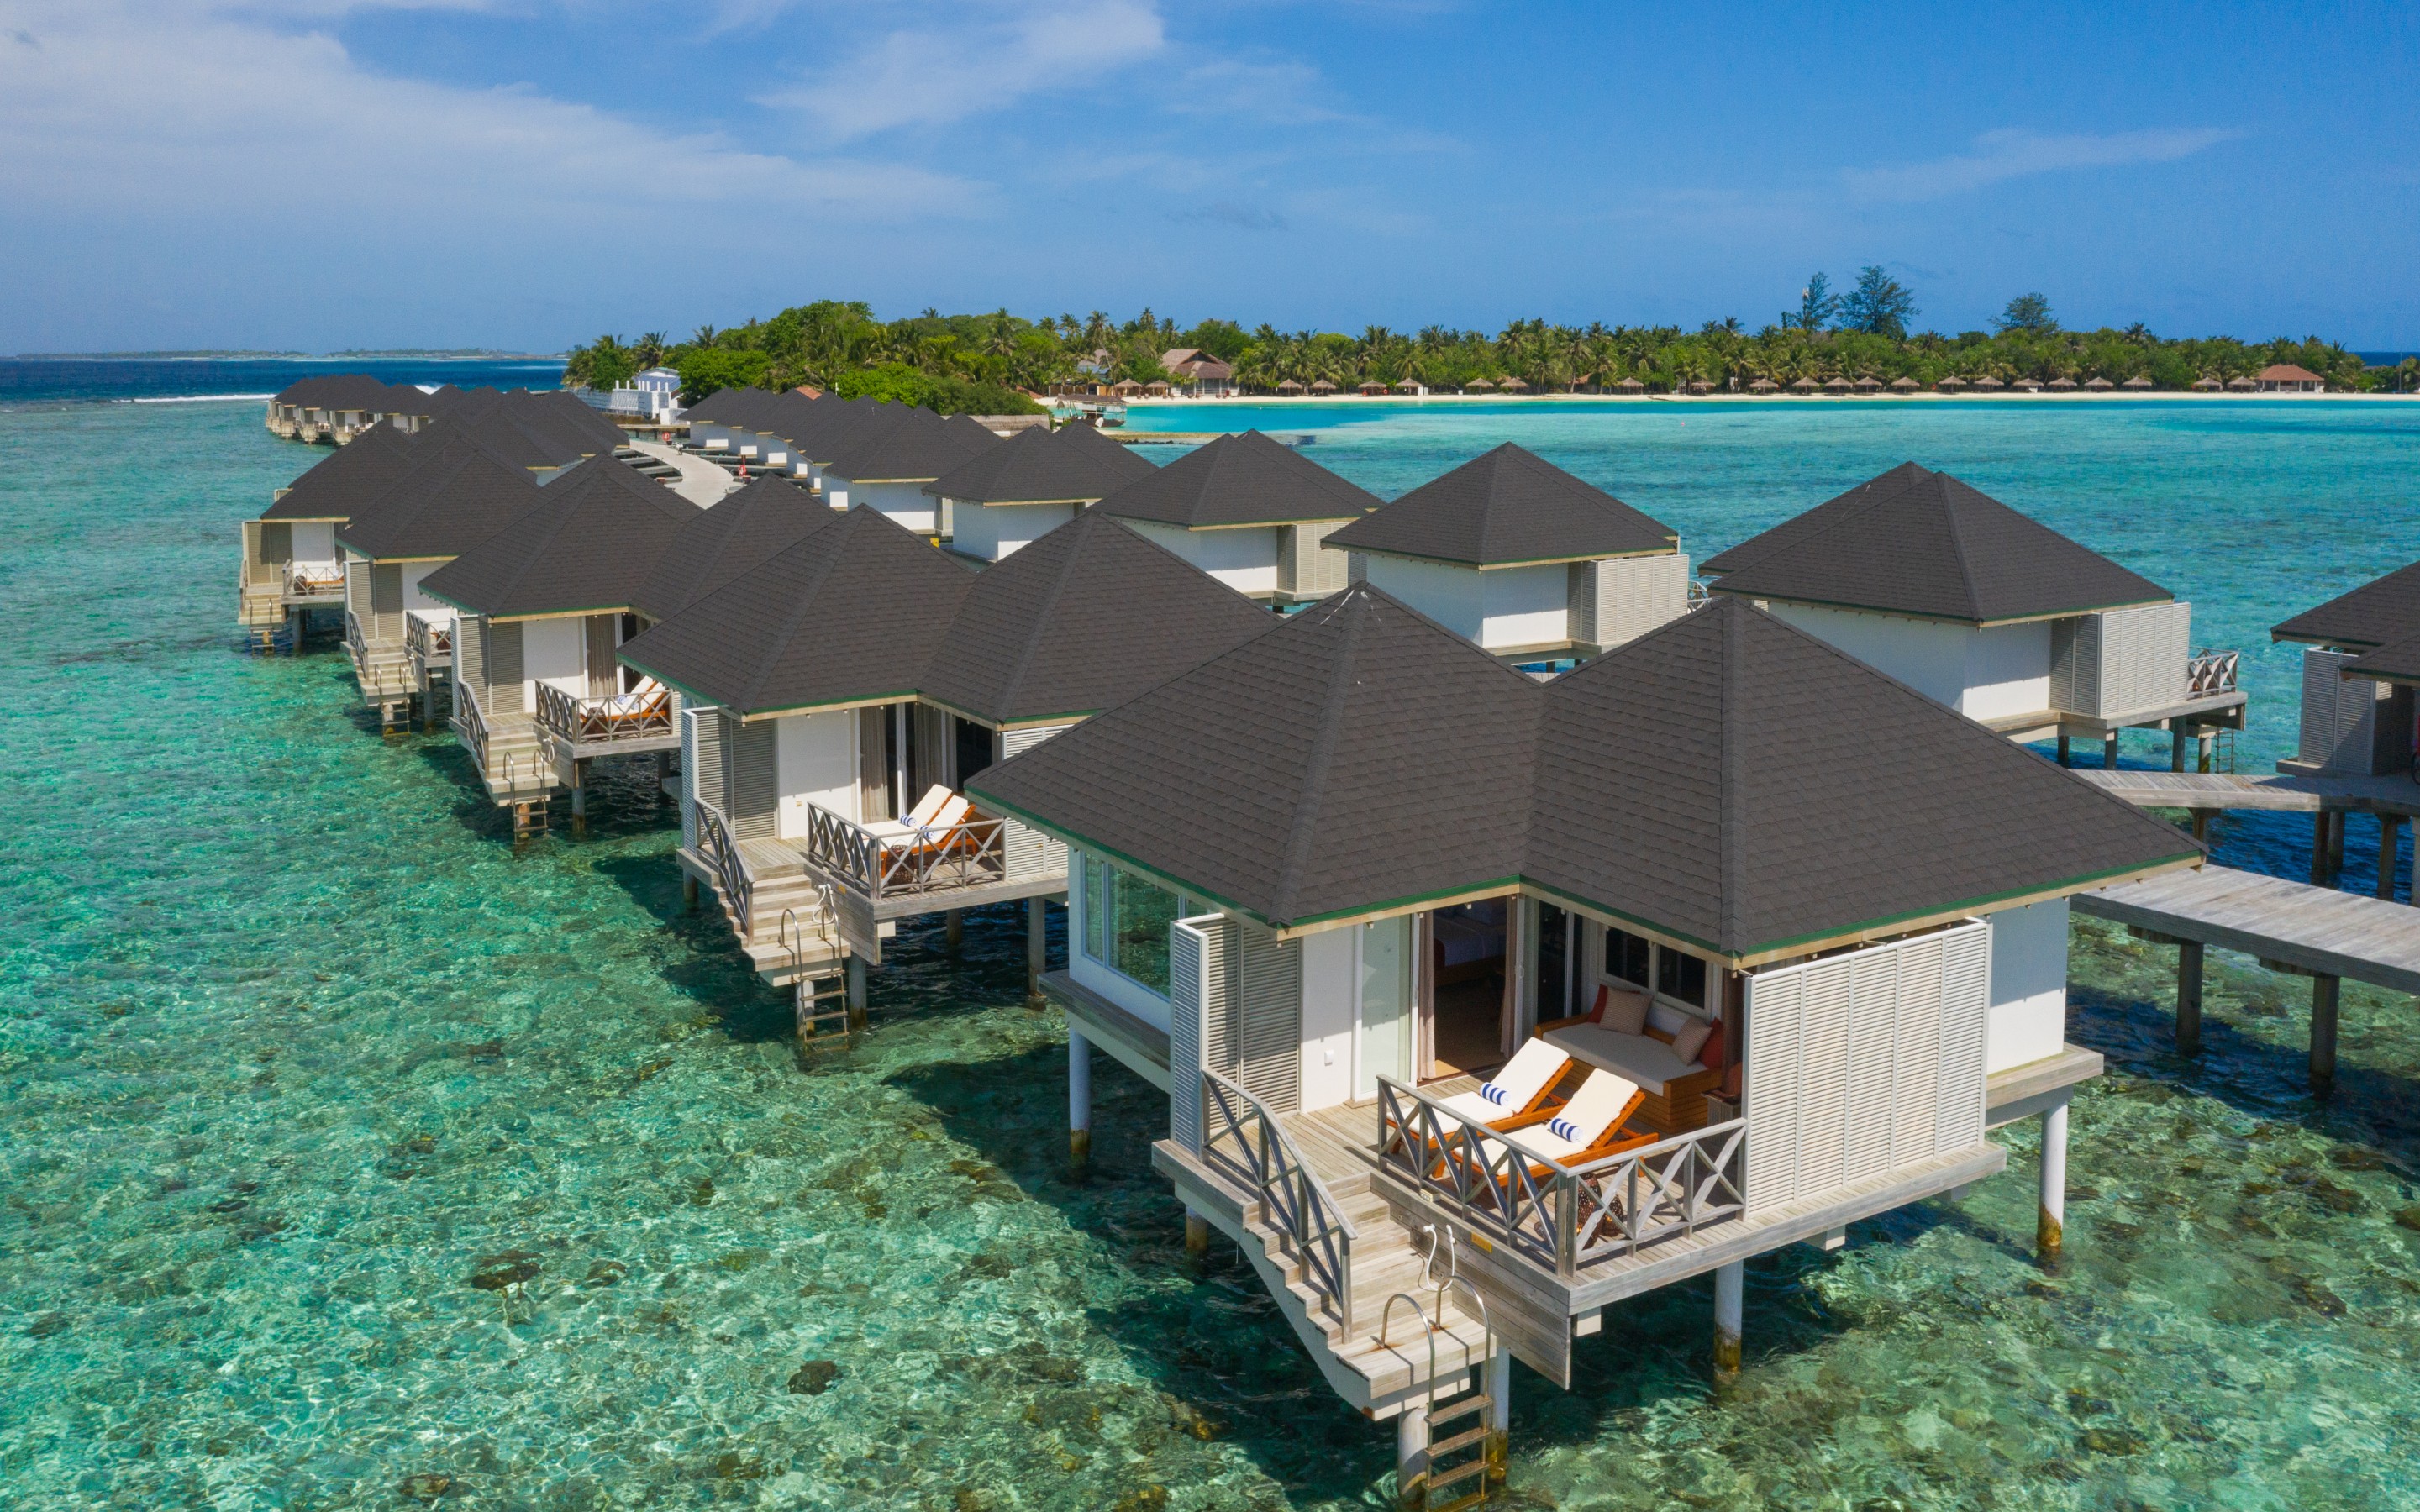 Cinnamon island. Мальдивы Cinnamon Dhonveli. Отель на Мальдивах Cinnamon Dhonveli Maldives. Отель Cinnamon Dhonveli Maldives 4. Синамон отель Мальдивы Синнамон Донвели.